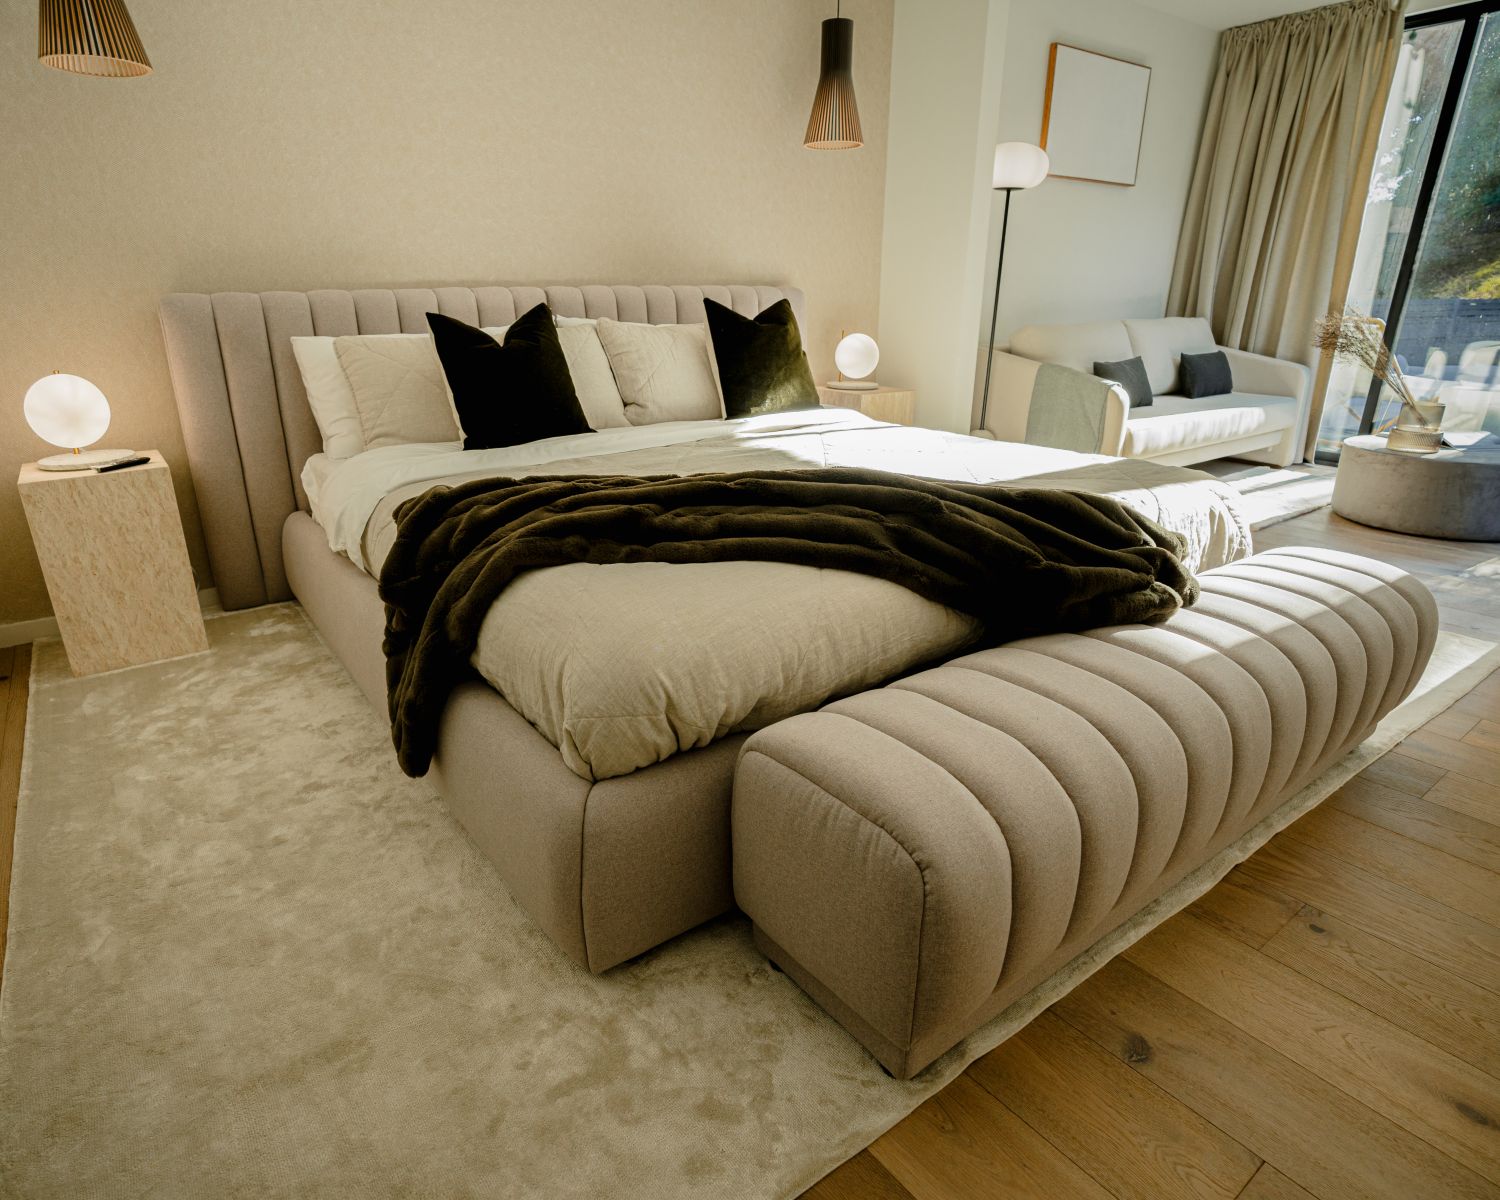 Luxury Modern Bed Frame for Bedroom